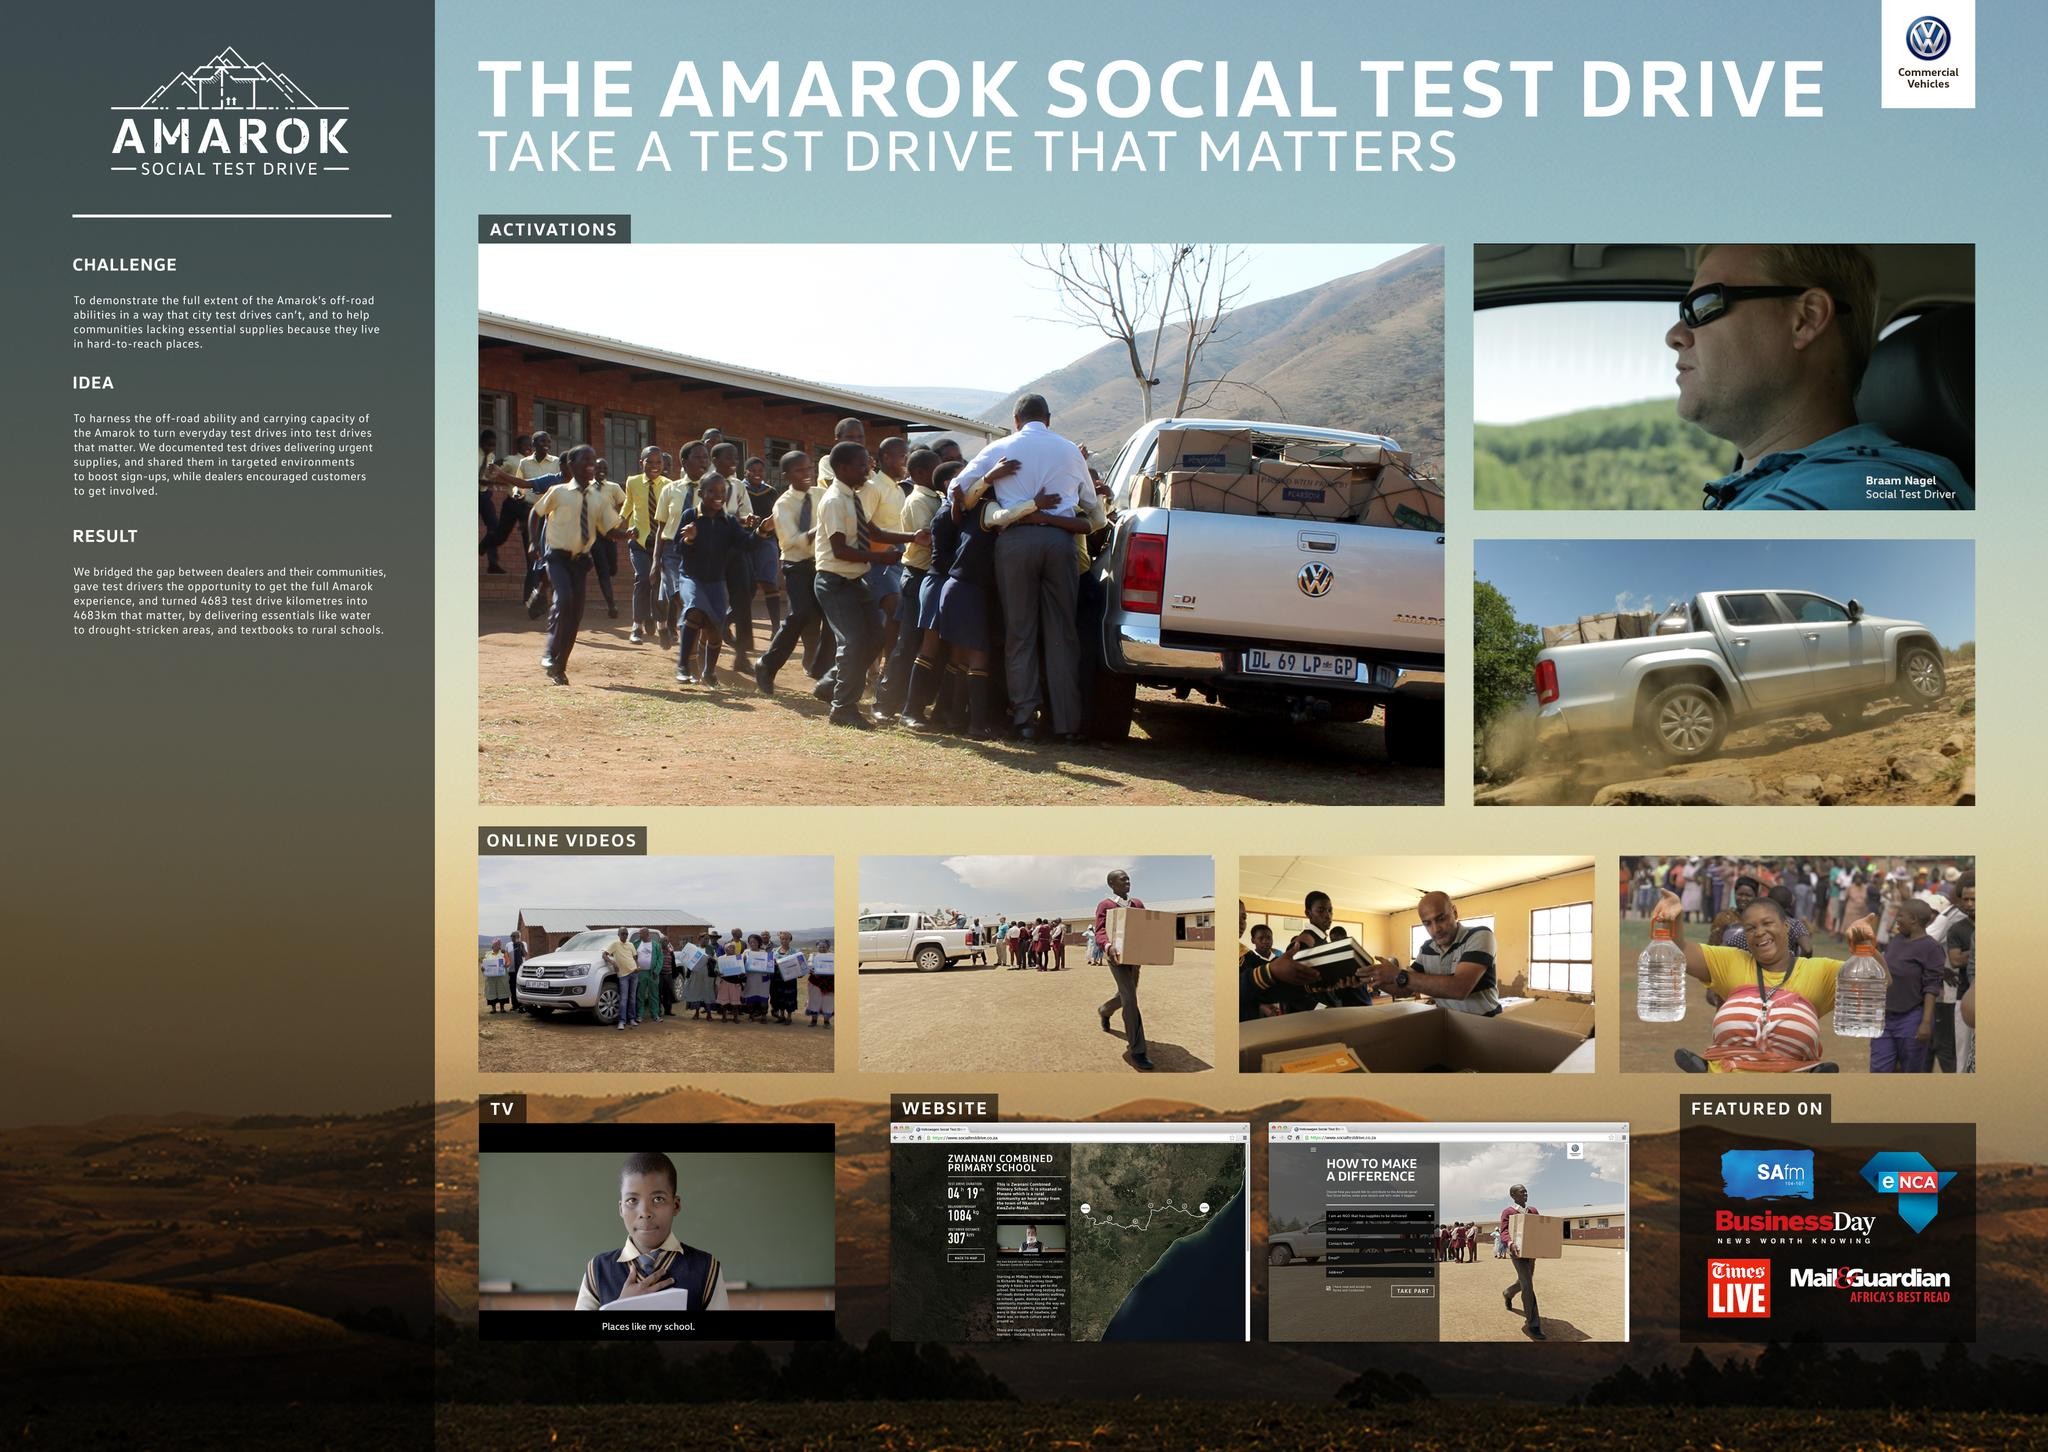 AMAROK SOCIAL TEST DRIVE